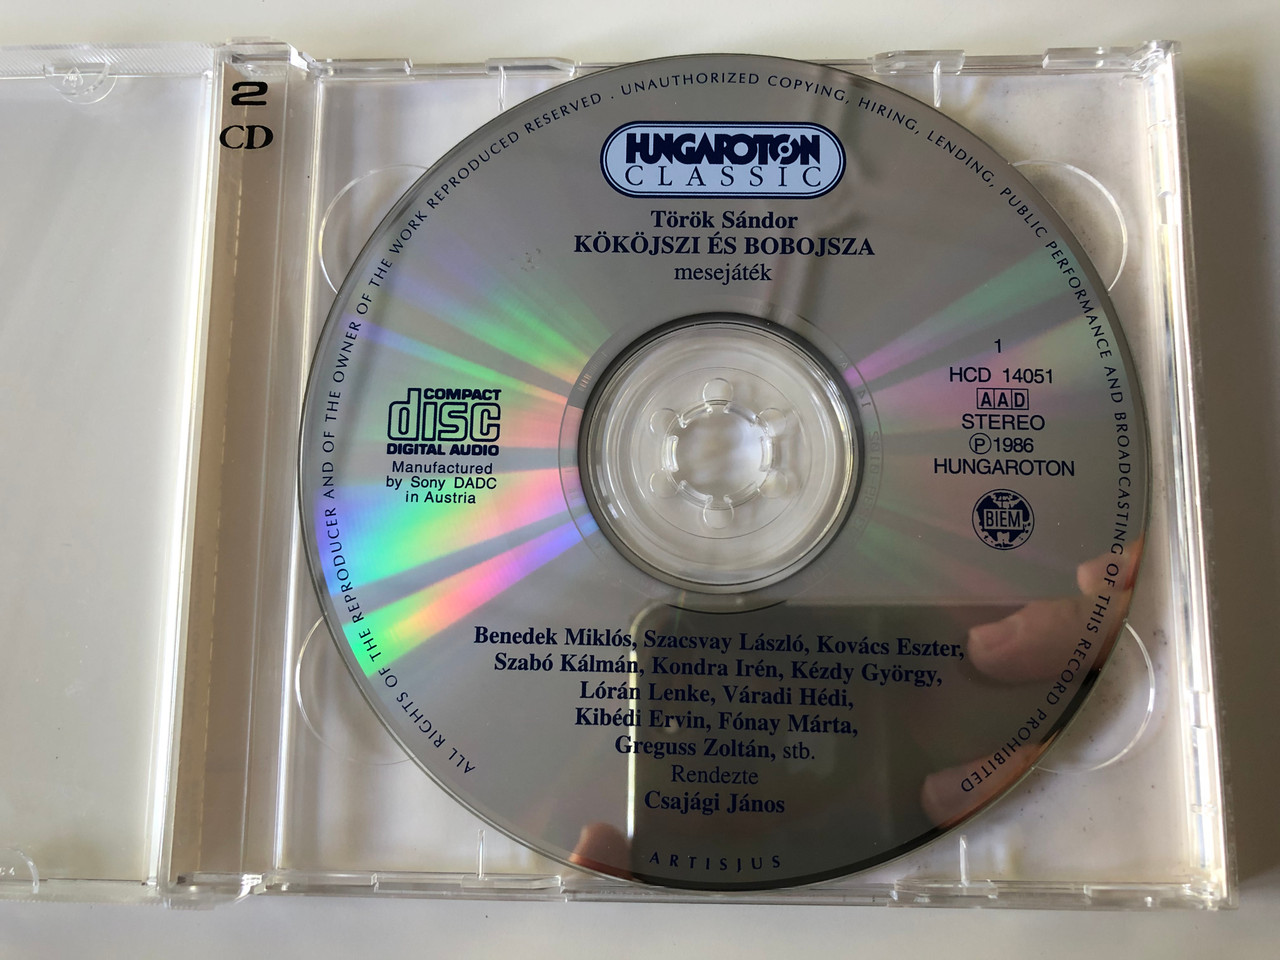 Török Sandor - Kököjszi és Bobojsza / Hungaroton Classic 2x Audio CD 1999  Stereo / HCD 14051-52 - bibleinmylanguage